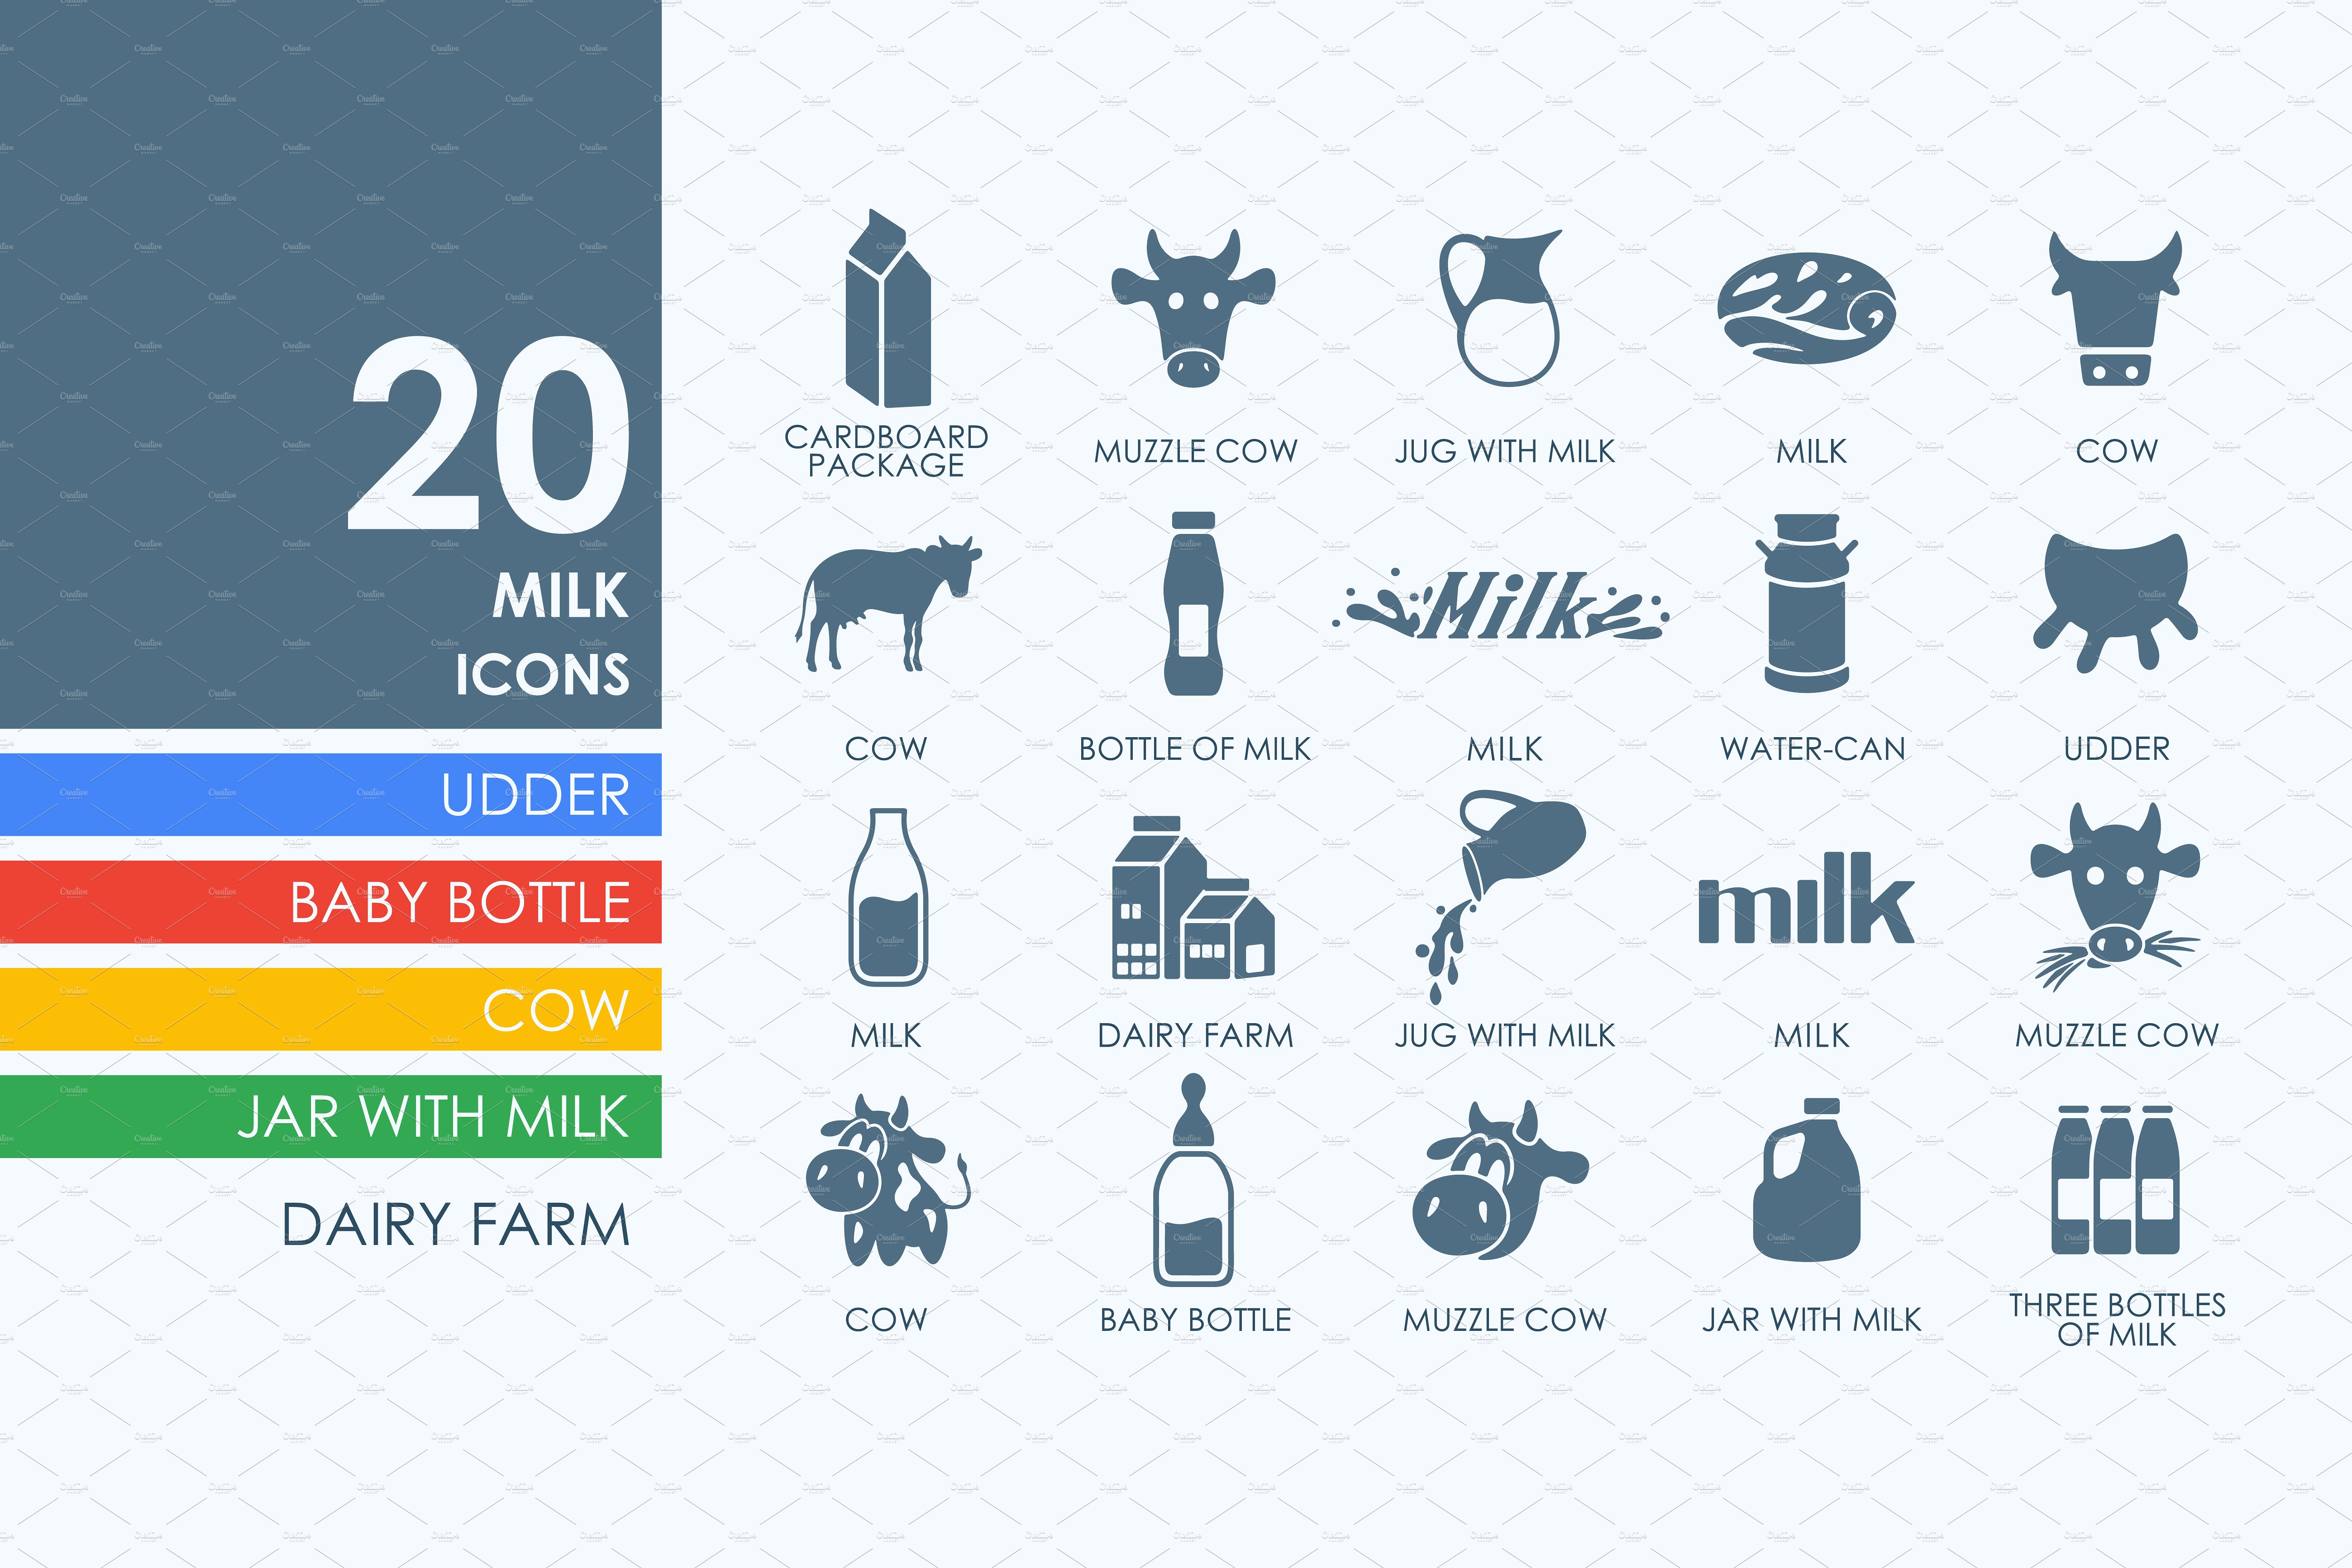 牛奶主题的图标 20 milk icons #91204